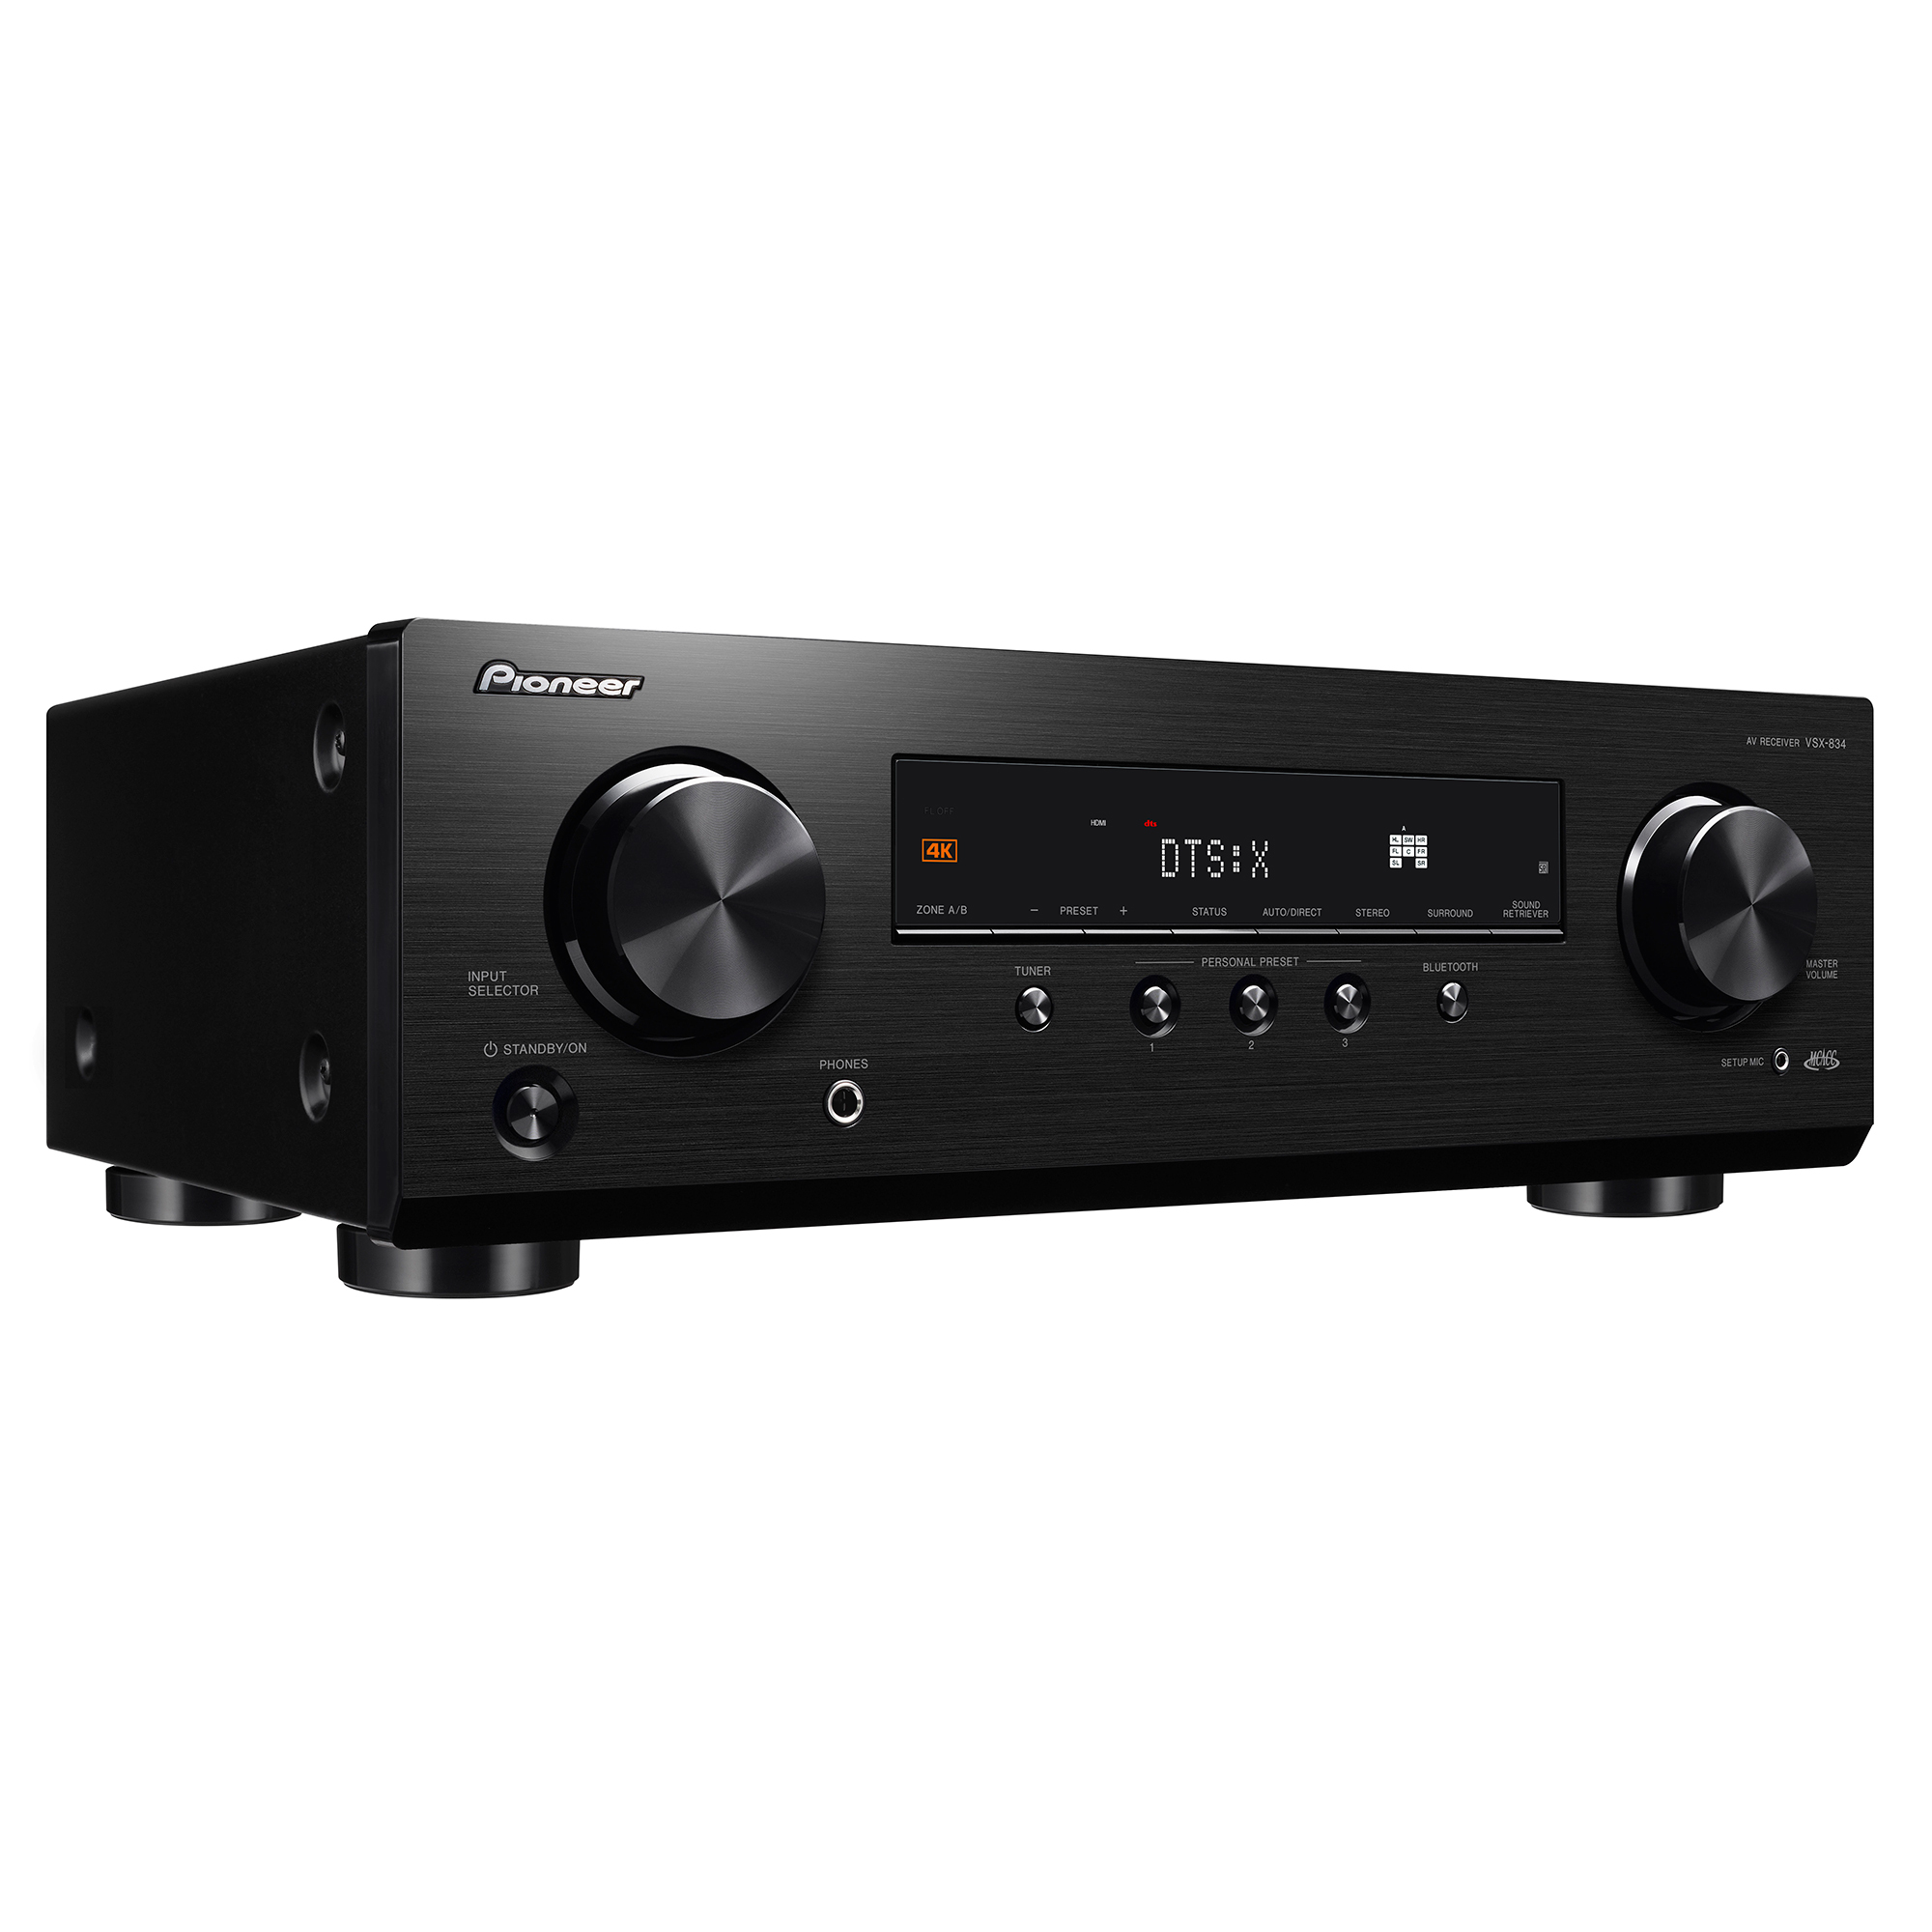 VSX-834 | Pioneer Home Audio